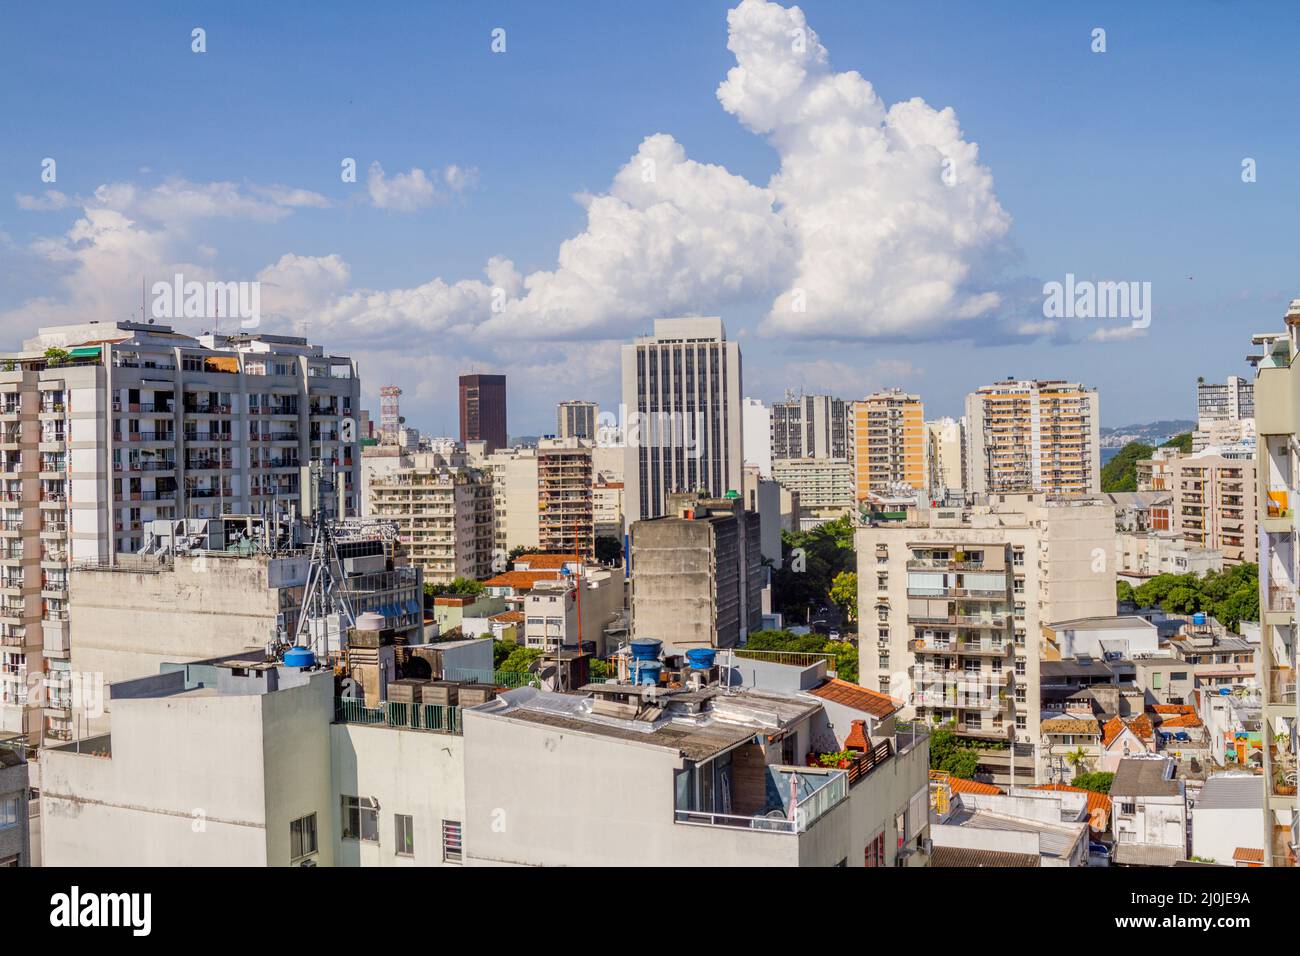 buildings in the neighborhood of Botafogo in Rio de Janeiro, Brazil. Stock Photo